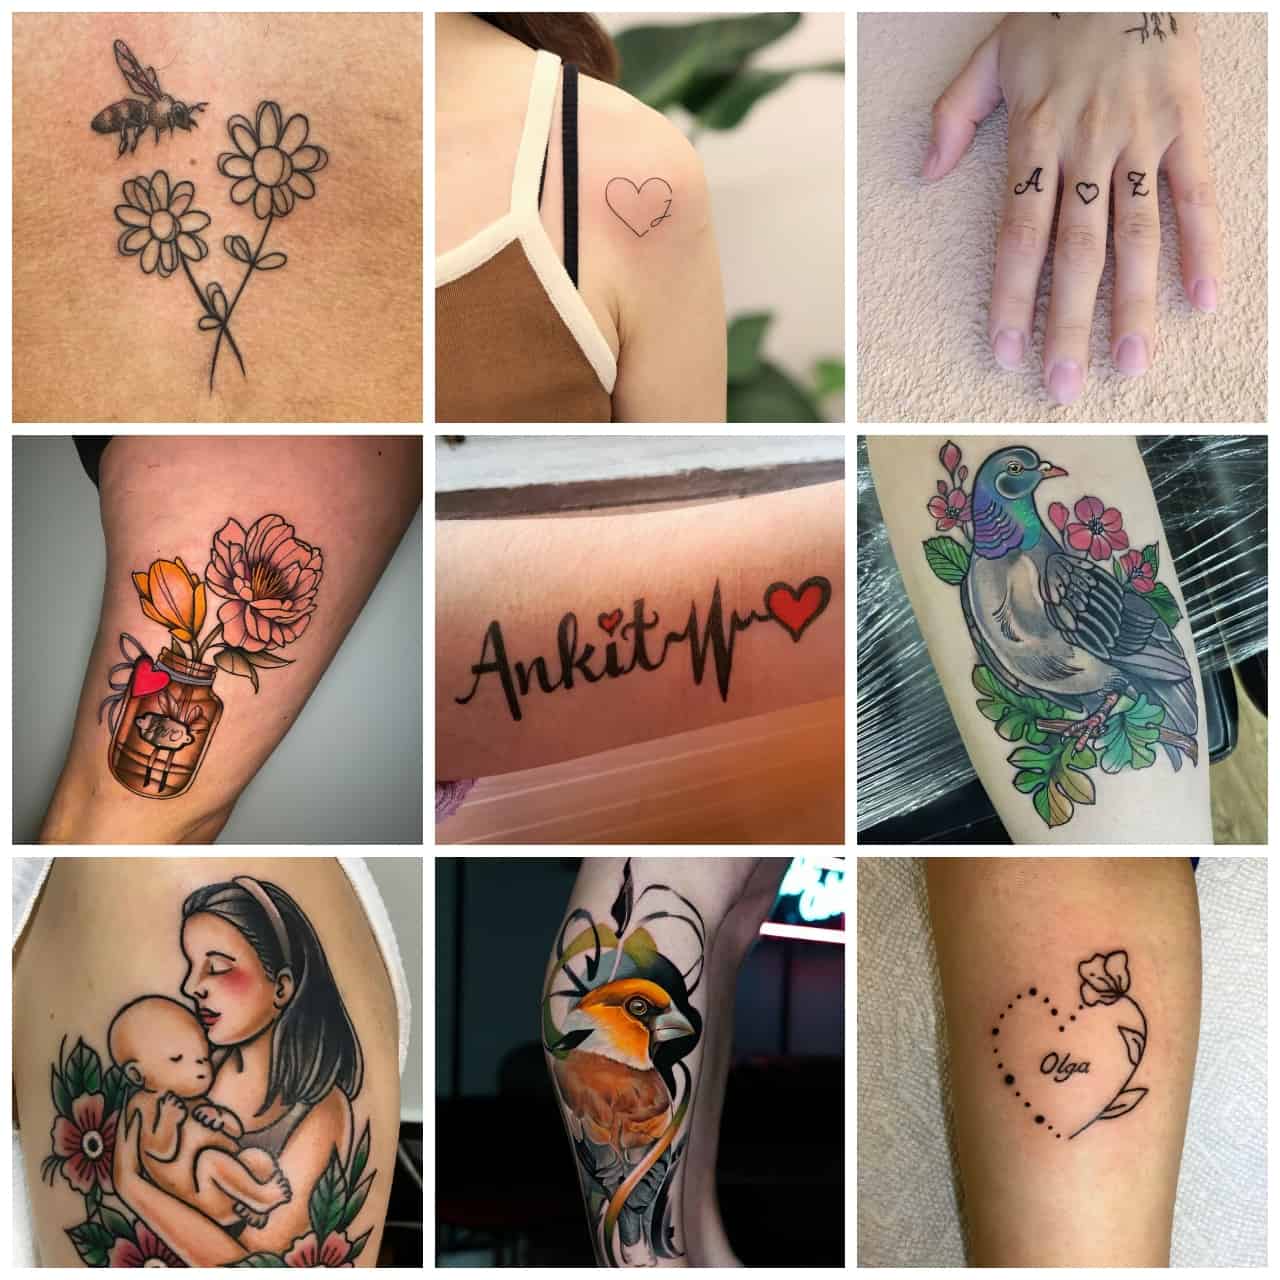 Ankit tattoo artist on Instagram: 